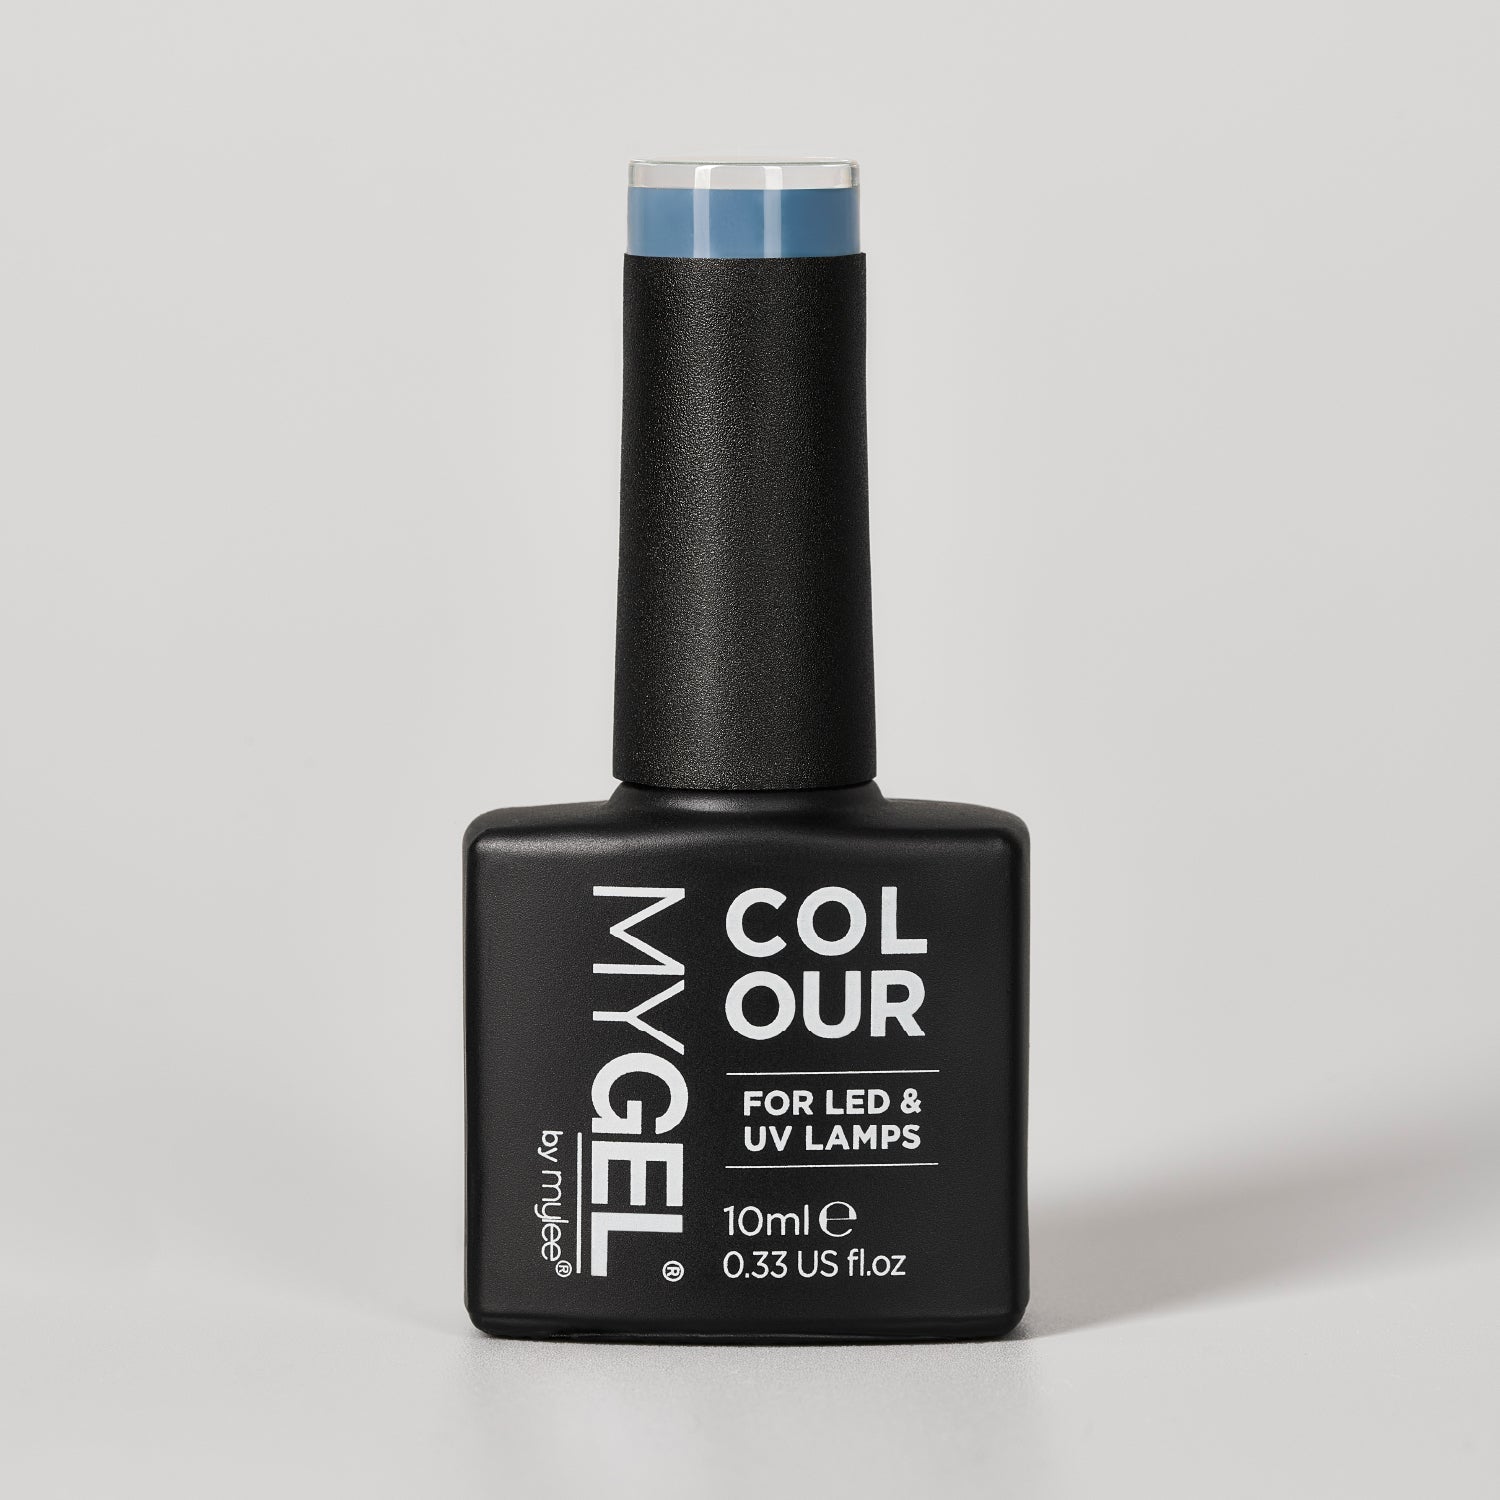 Mylee Namaste LED/UV Blue Gel Nail Polish 10ml – Long Lasting At Home Manicure/Pedicure, High Gloss And Chip Free Wear Nail Varnish